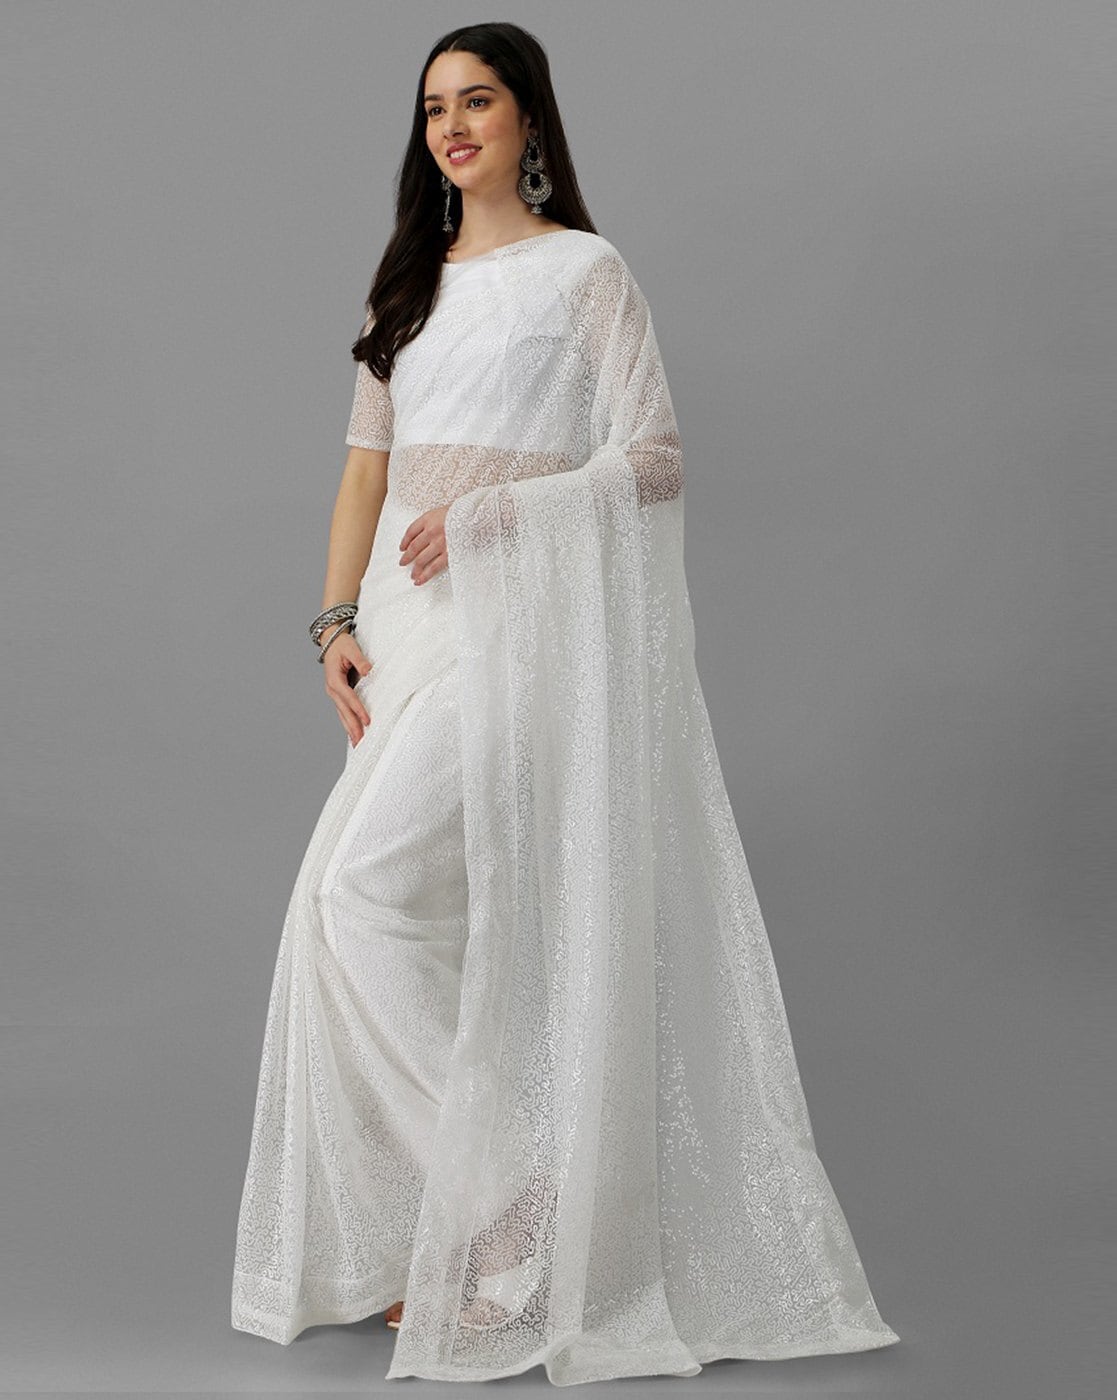 White - Plain Sarees - Indian Saree: Online Saree Shopping Made Easy With  Latest Designs at Utsav Fashion